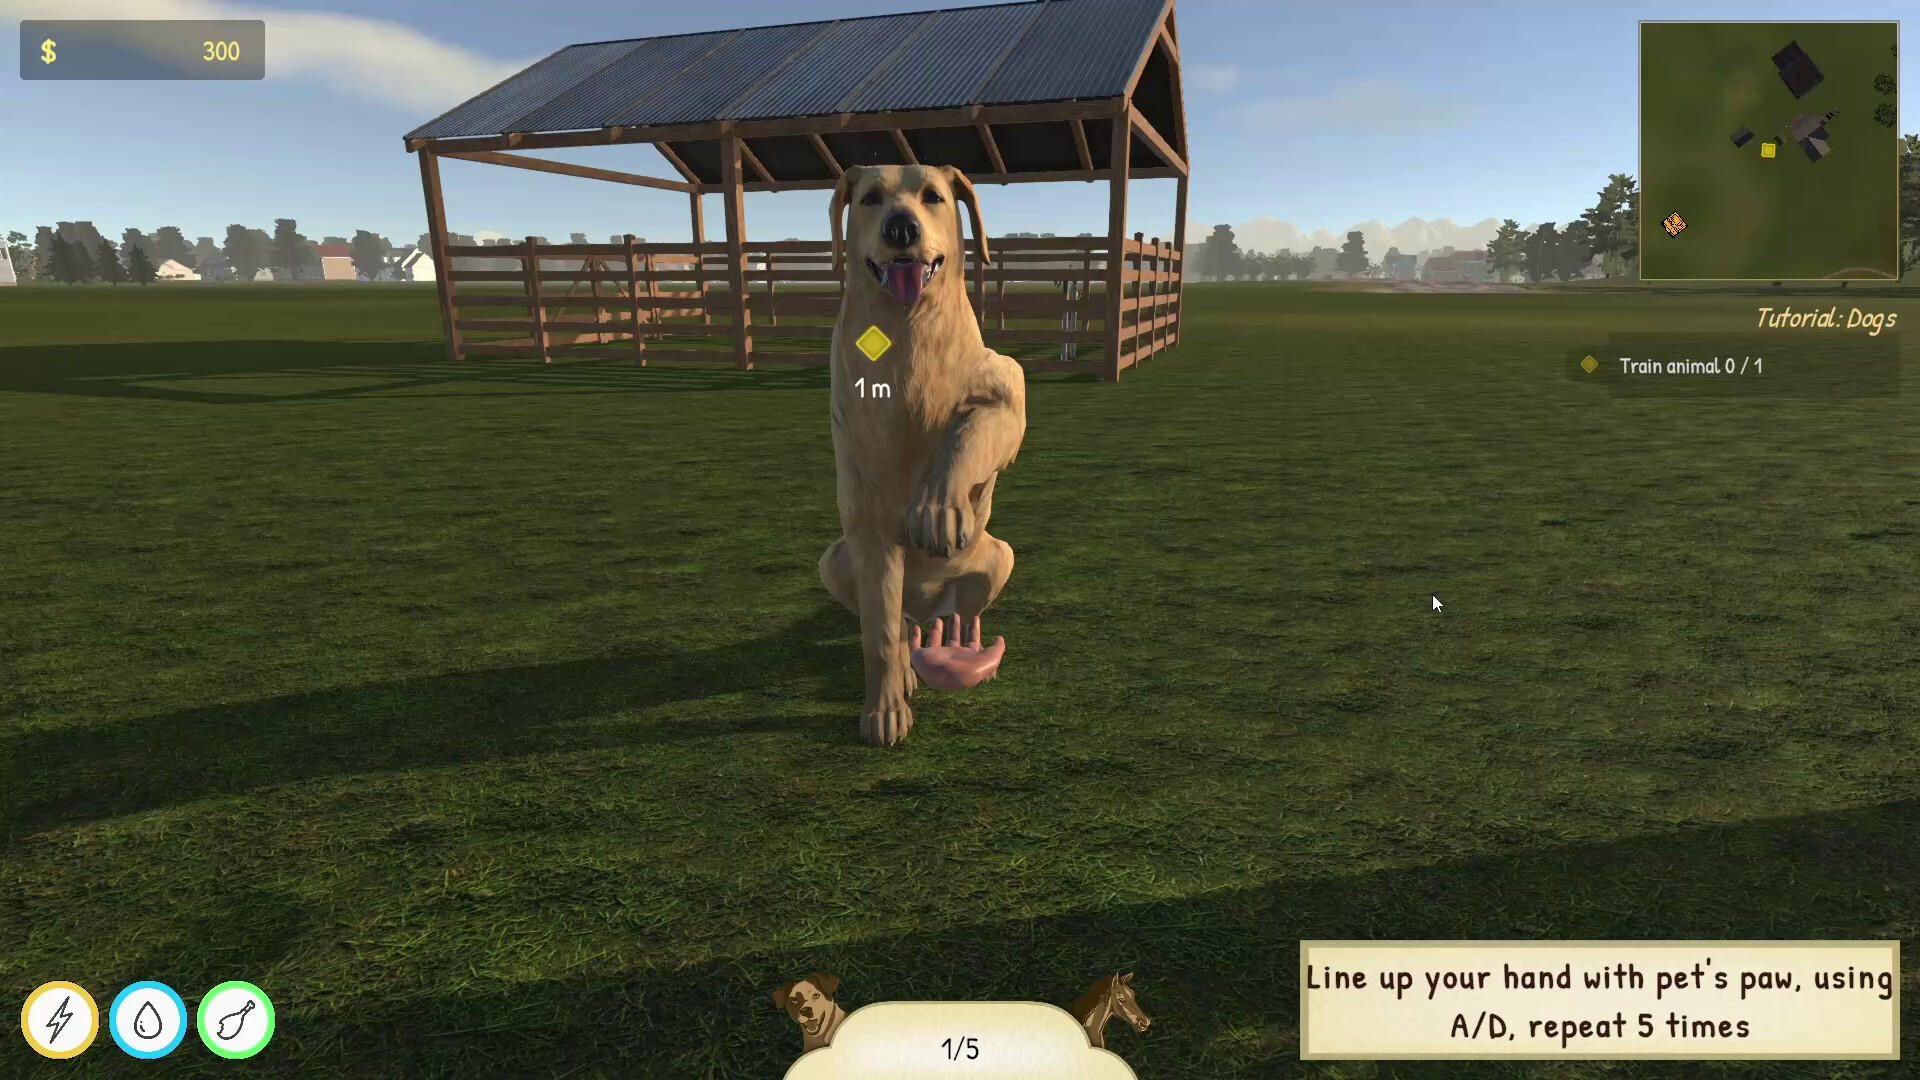 Screenshot 1 of တိရစ္ဆာန်လေ့ကျင့်ပေးသူ Simulator- စကားချီး 